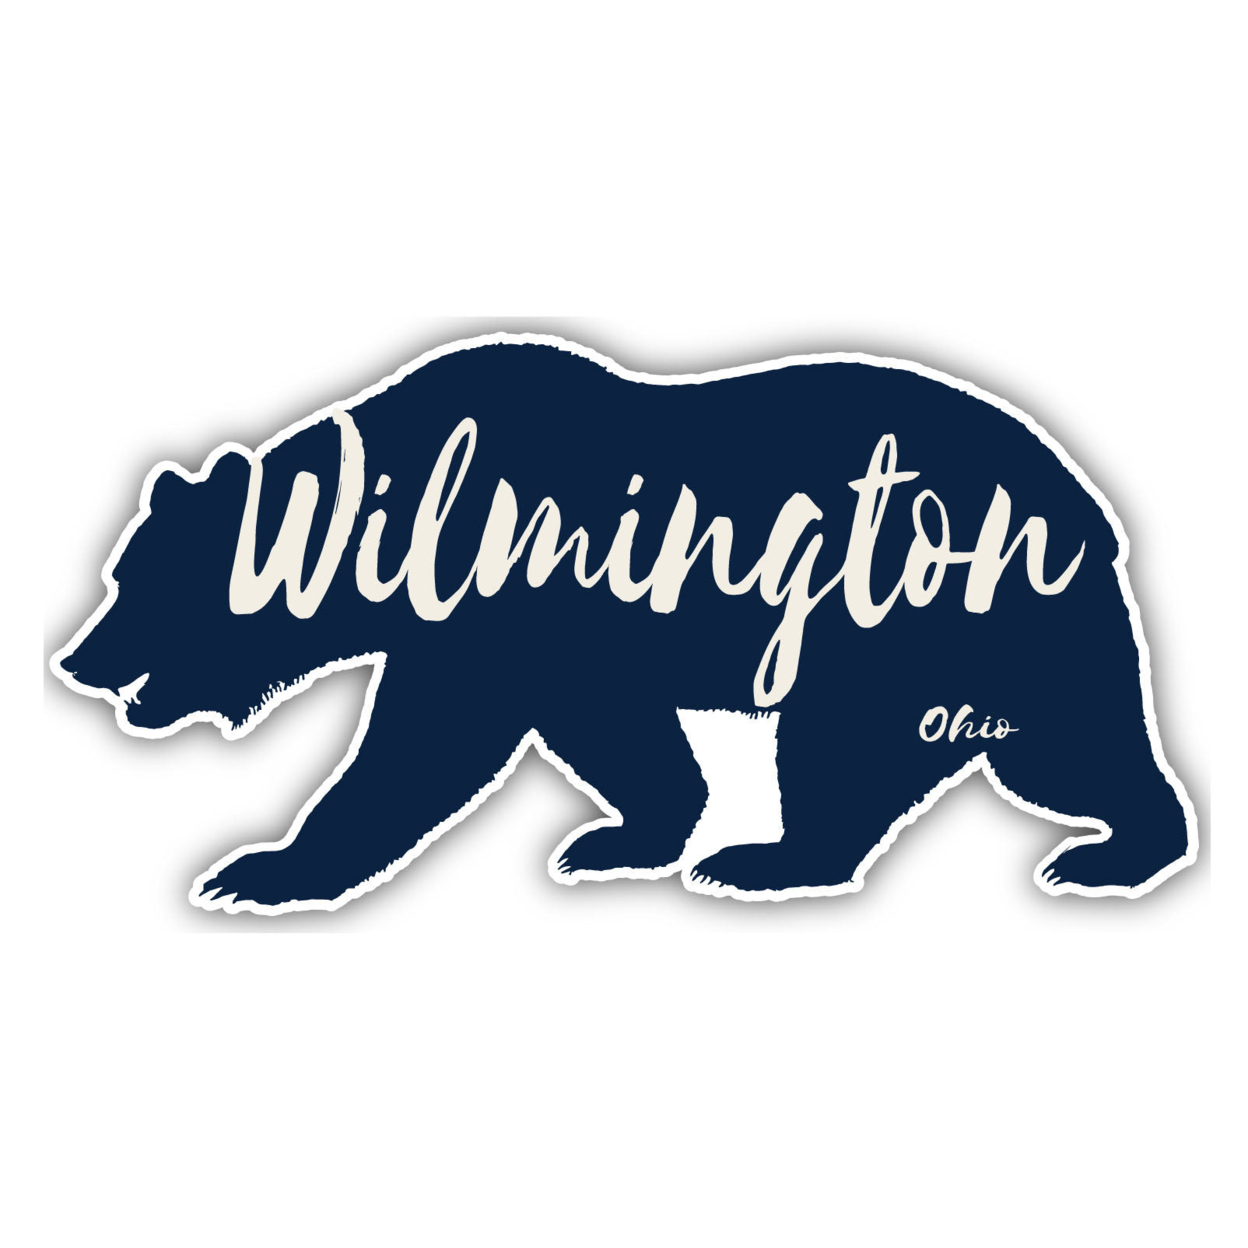 Wilmington Ohio Souvenir Decorative Stickers (Choose Theme And Size) - Single Unit, 4-Inch, Bear